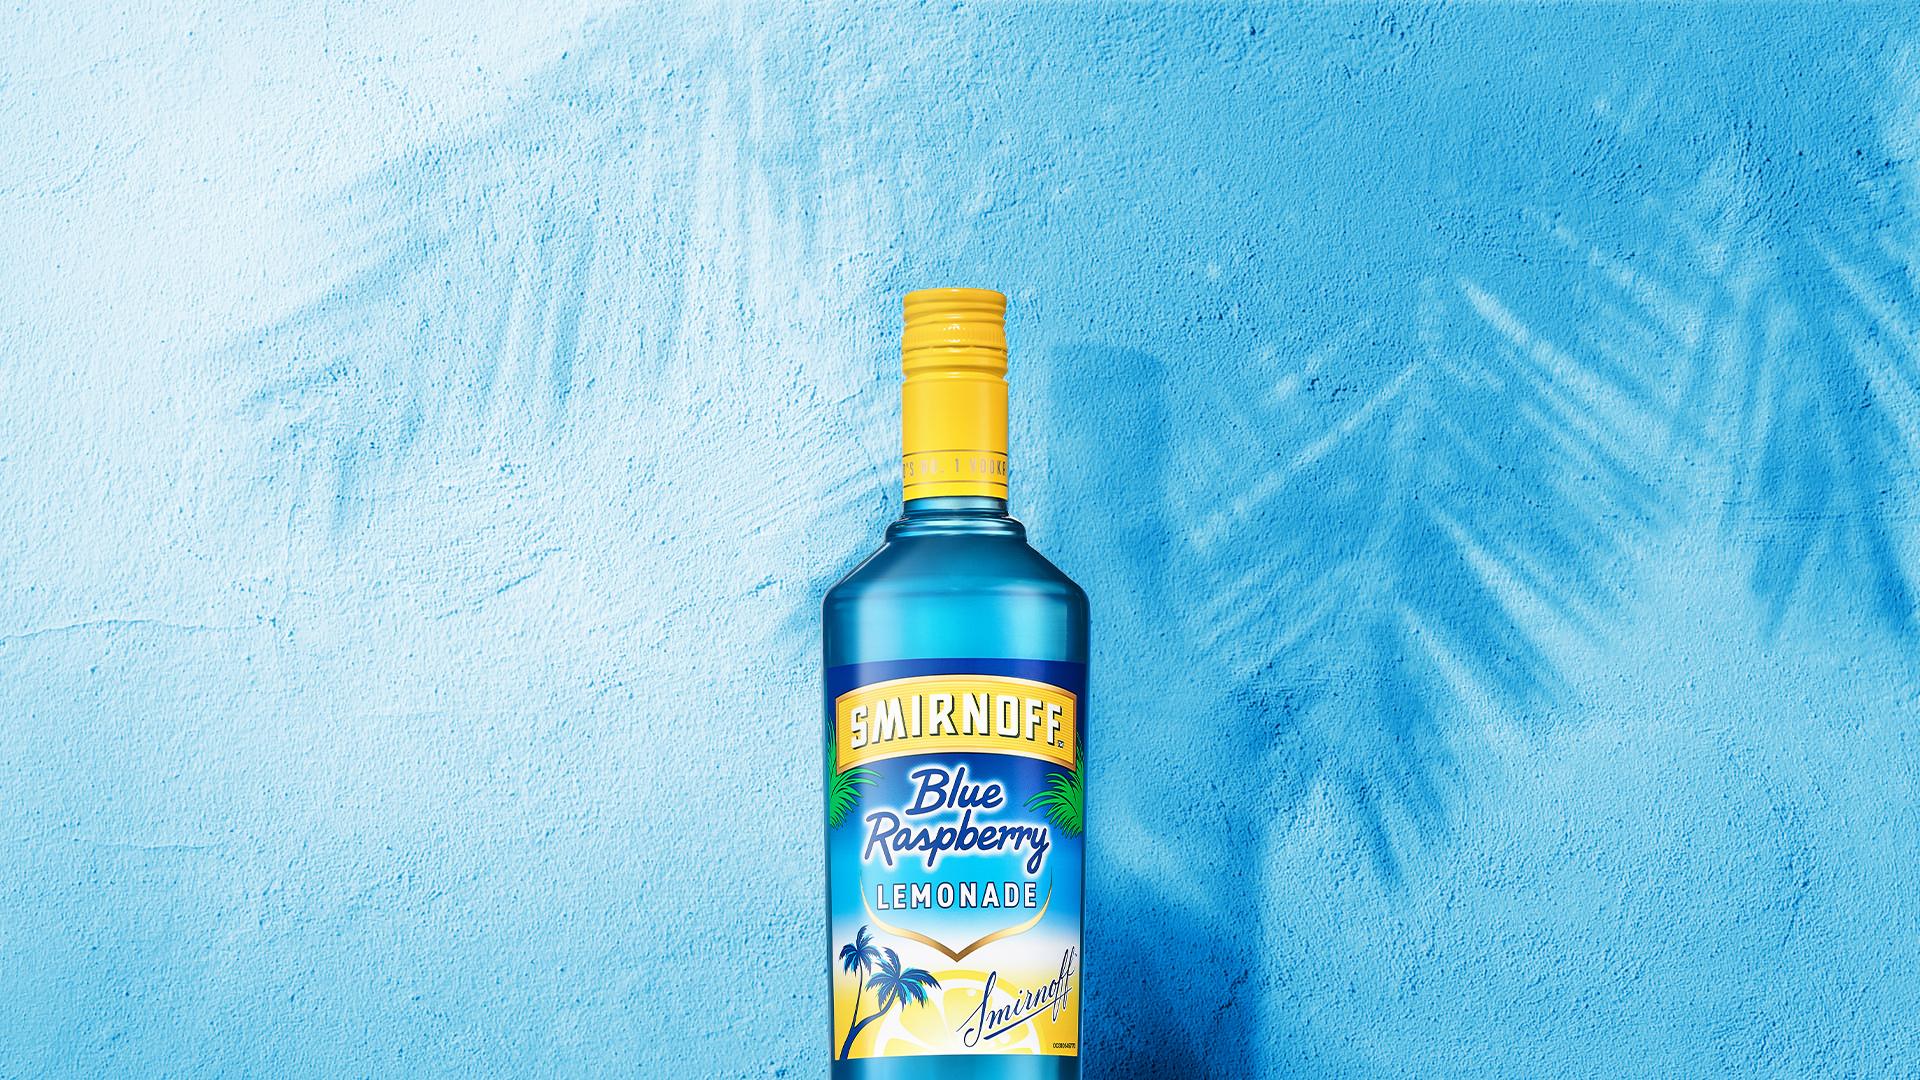 Smirnoff Blue Raspberry Lemonade on blue background with palm trees